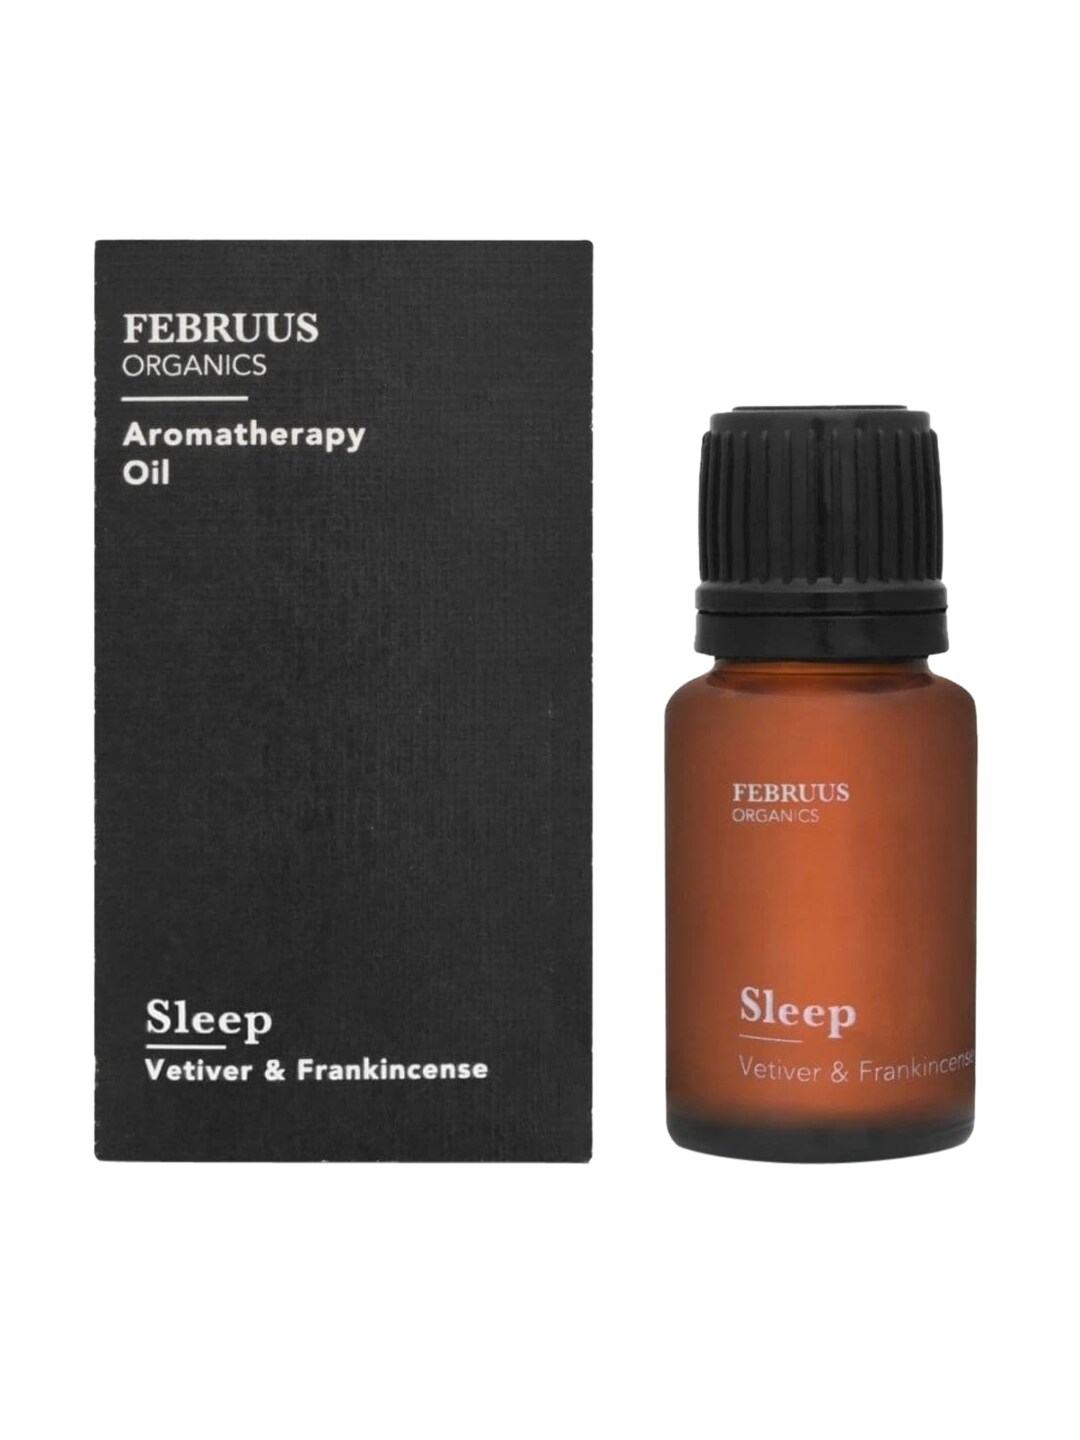 Februus Organics Sleep Aromatherapy Oil 10 ml Price in India